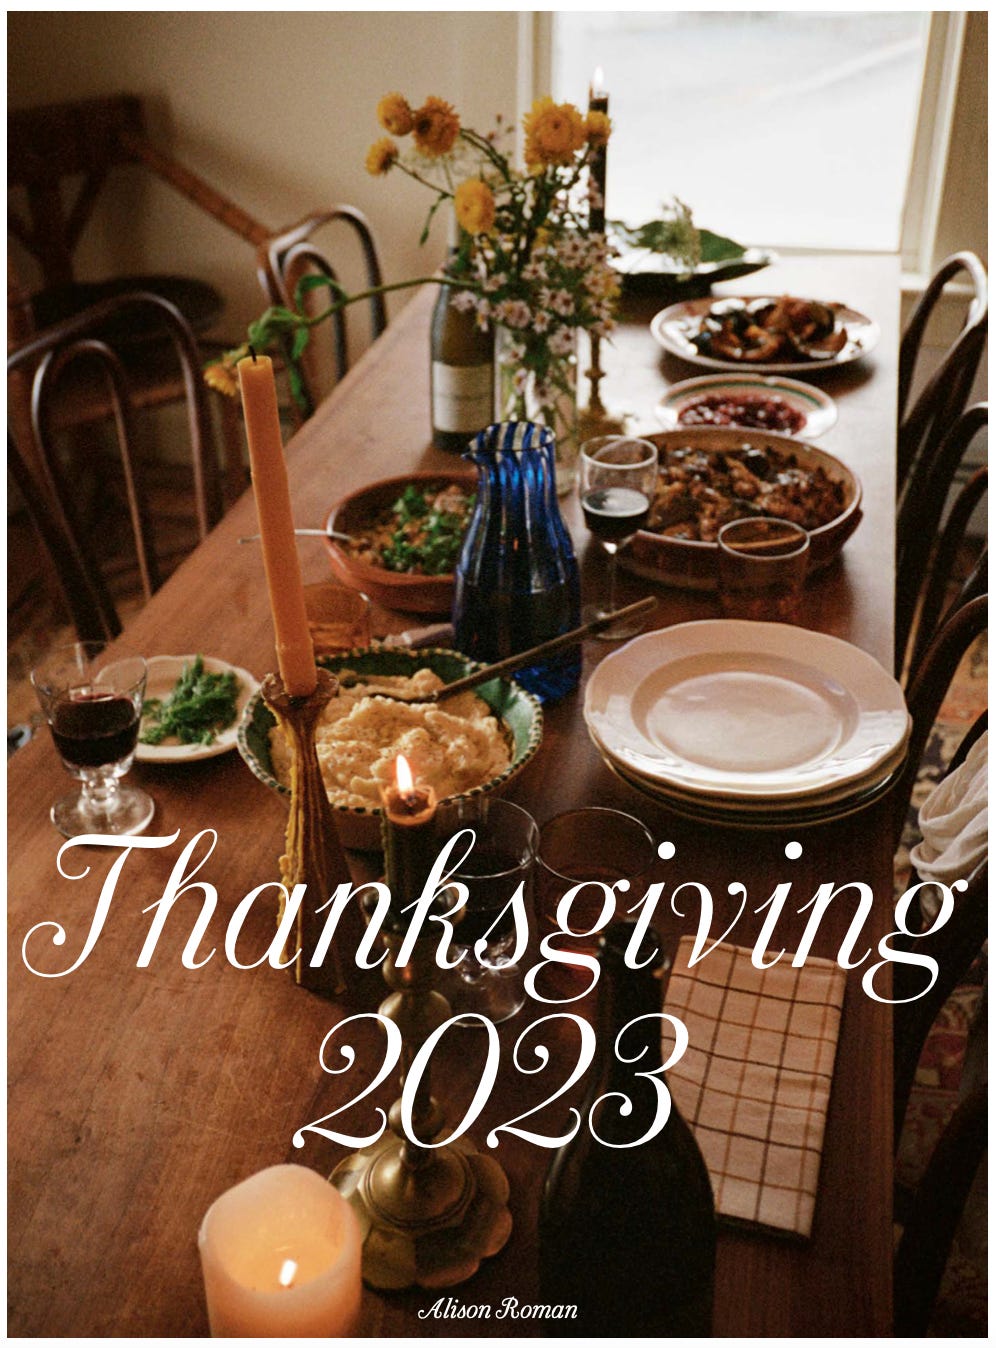 Alison Roman's Home Movies Thanksgiving 2023